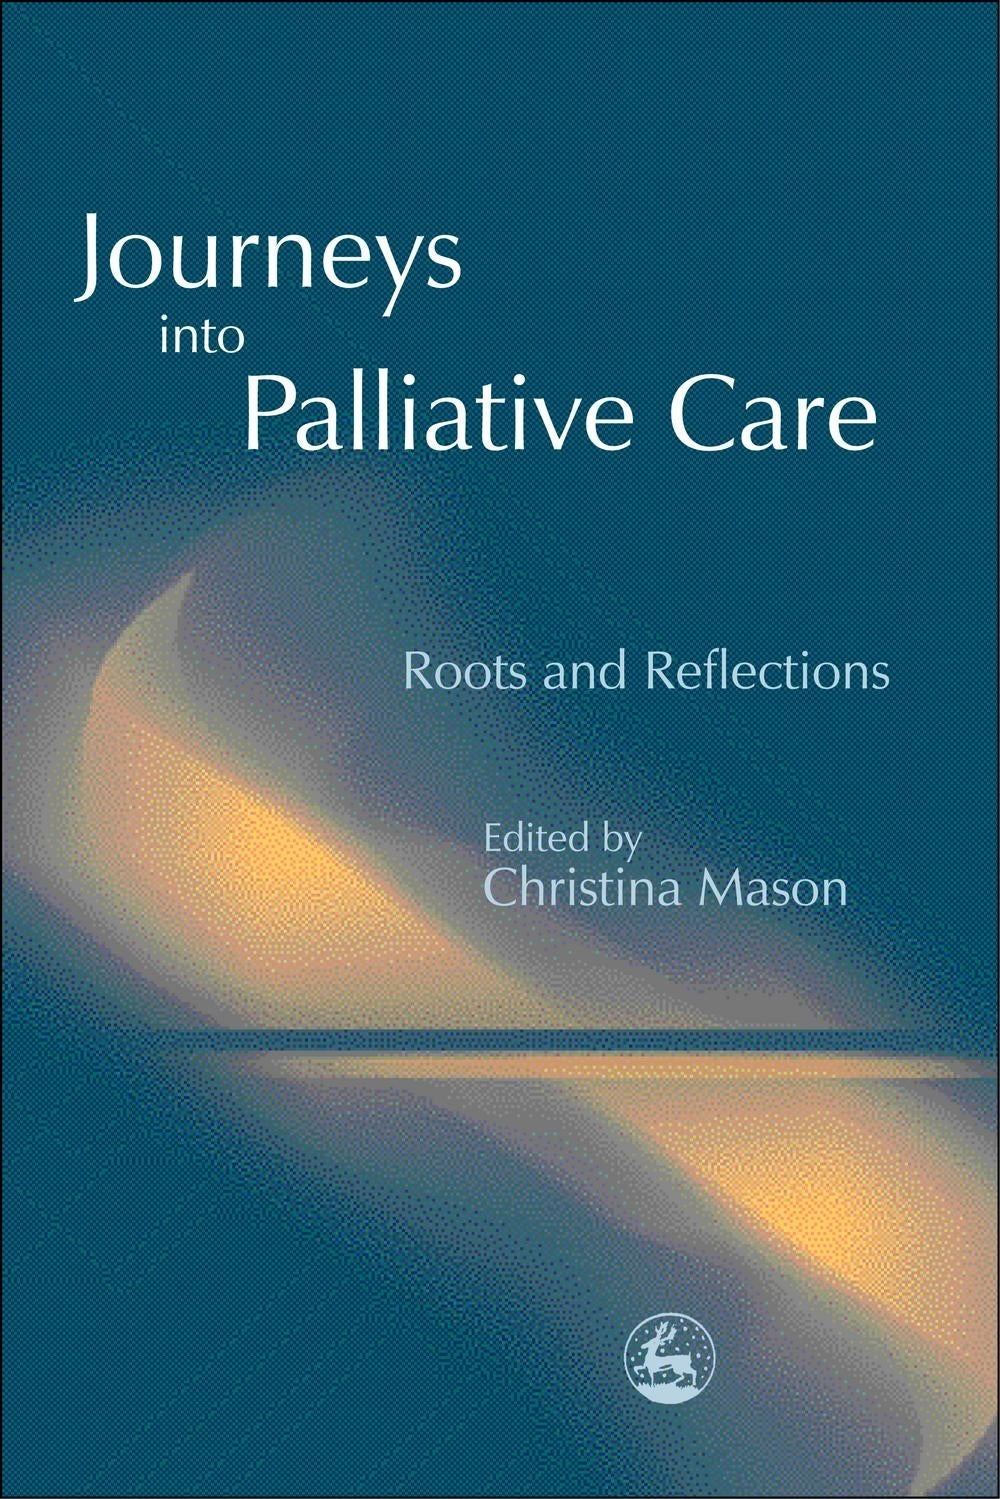 Journeys into Palliative Care by Christina Mason